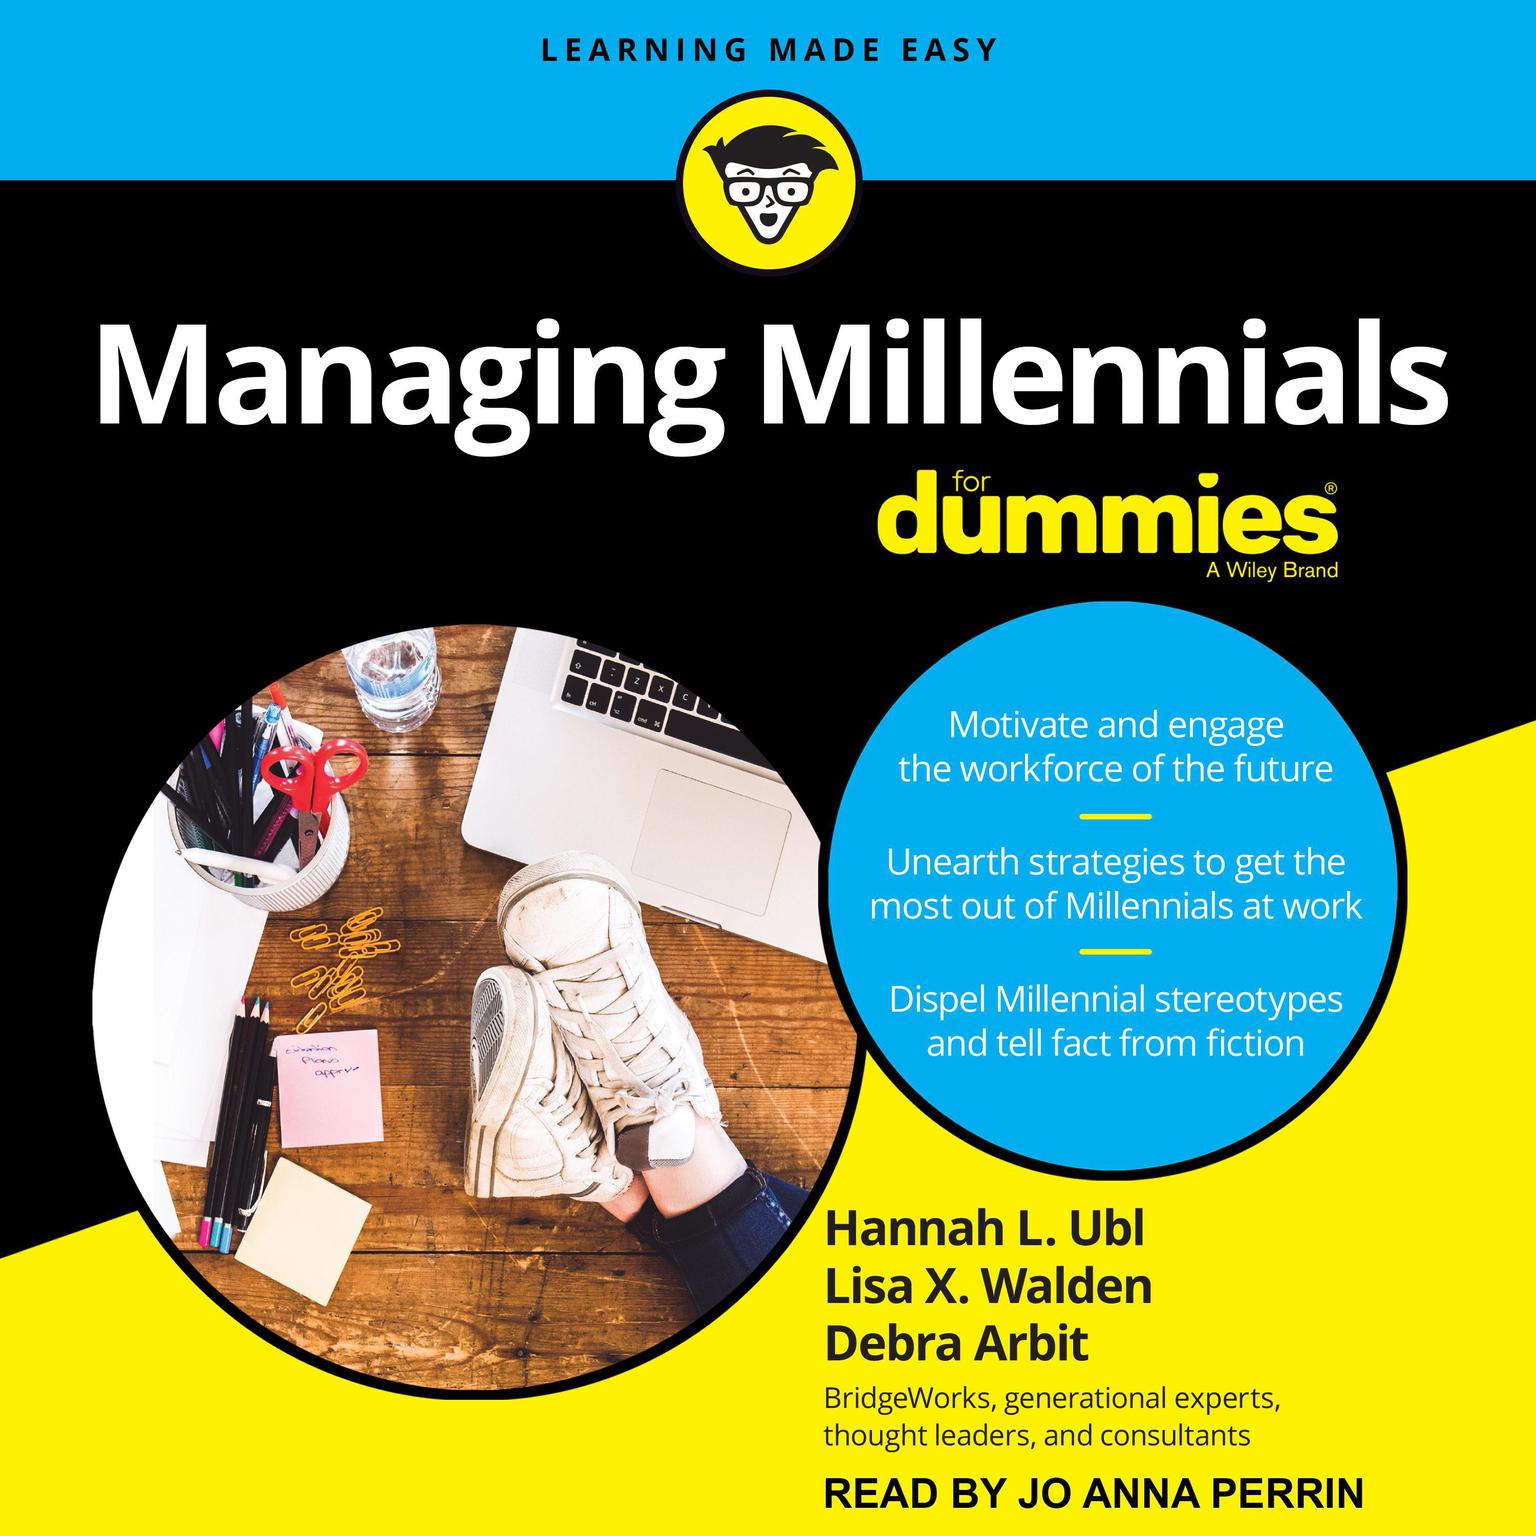 Managing Millennials For Dummies Audiobook, by Debra Arbit